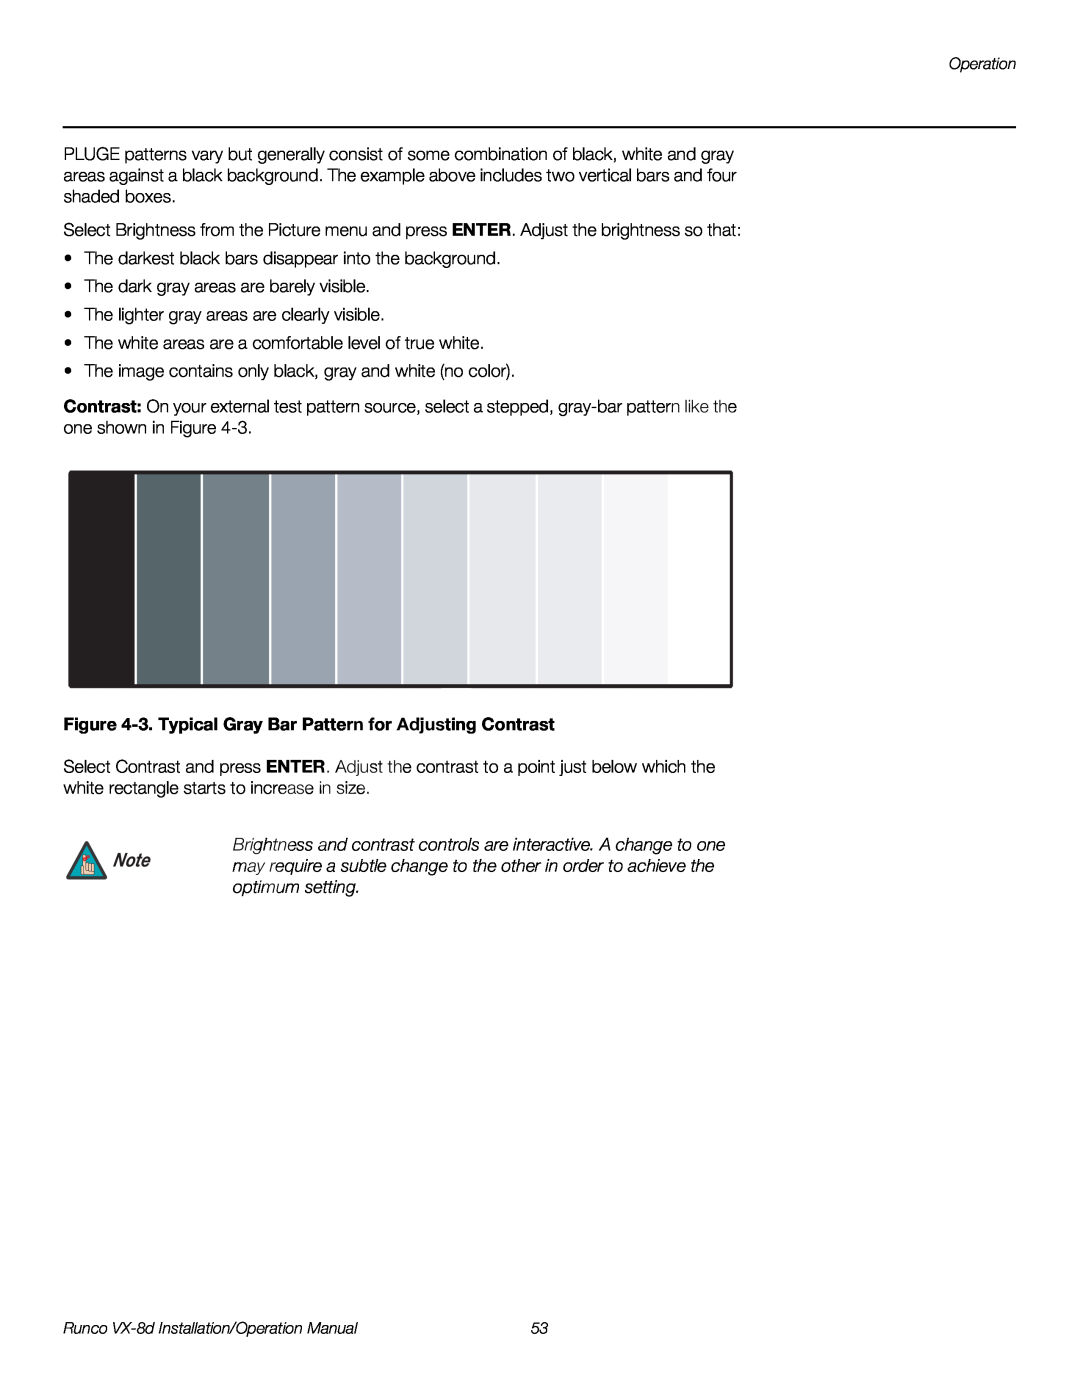 Runco VX-8D operation manual 3. Typical Gray Bar Pattern for Adjusting Contrast 